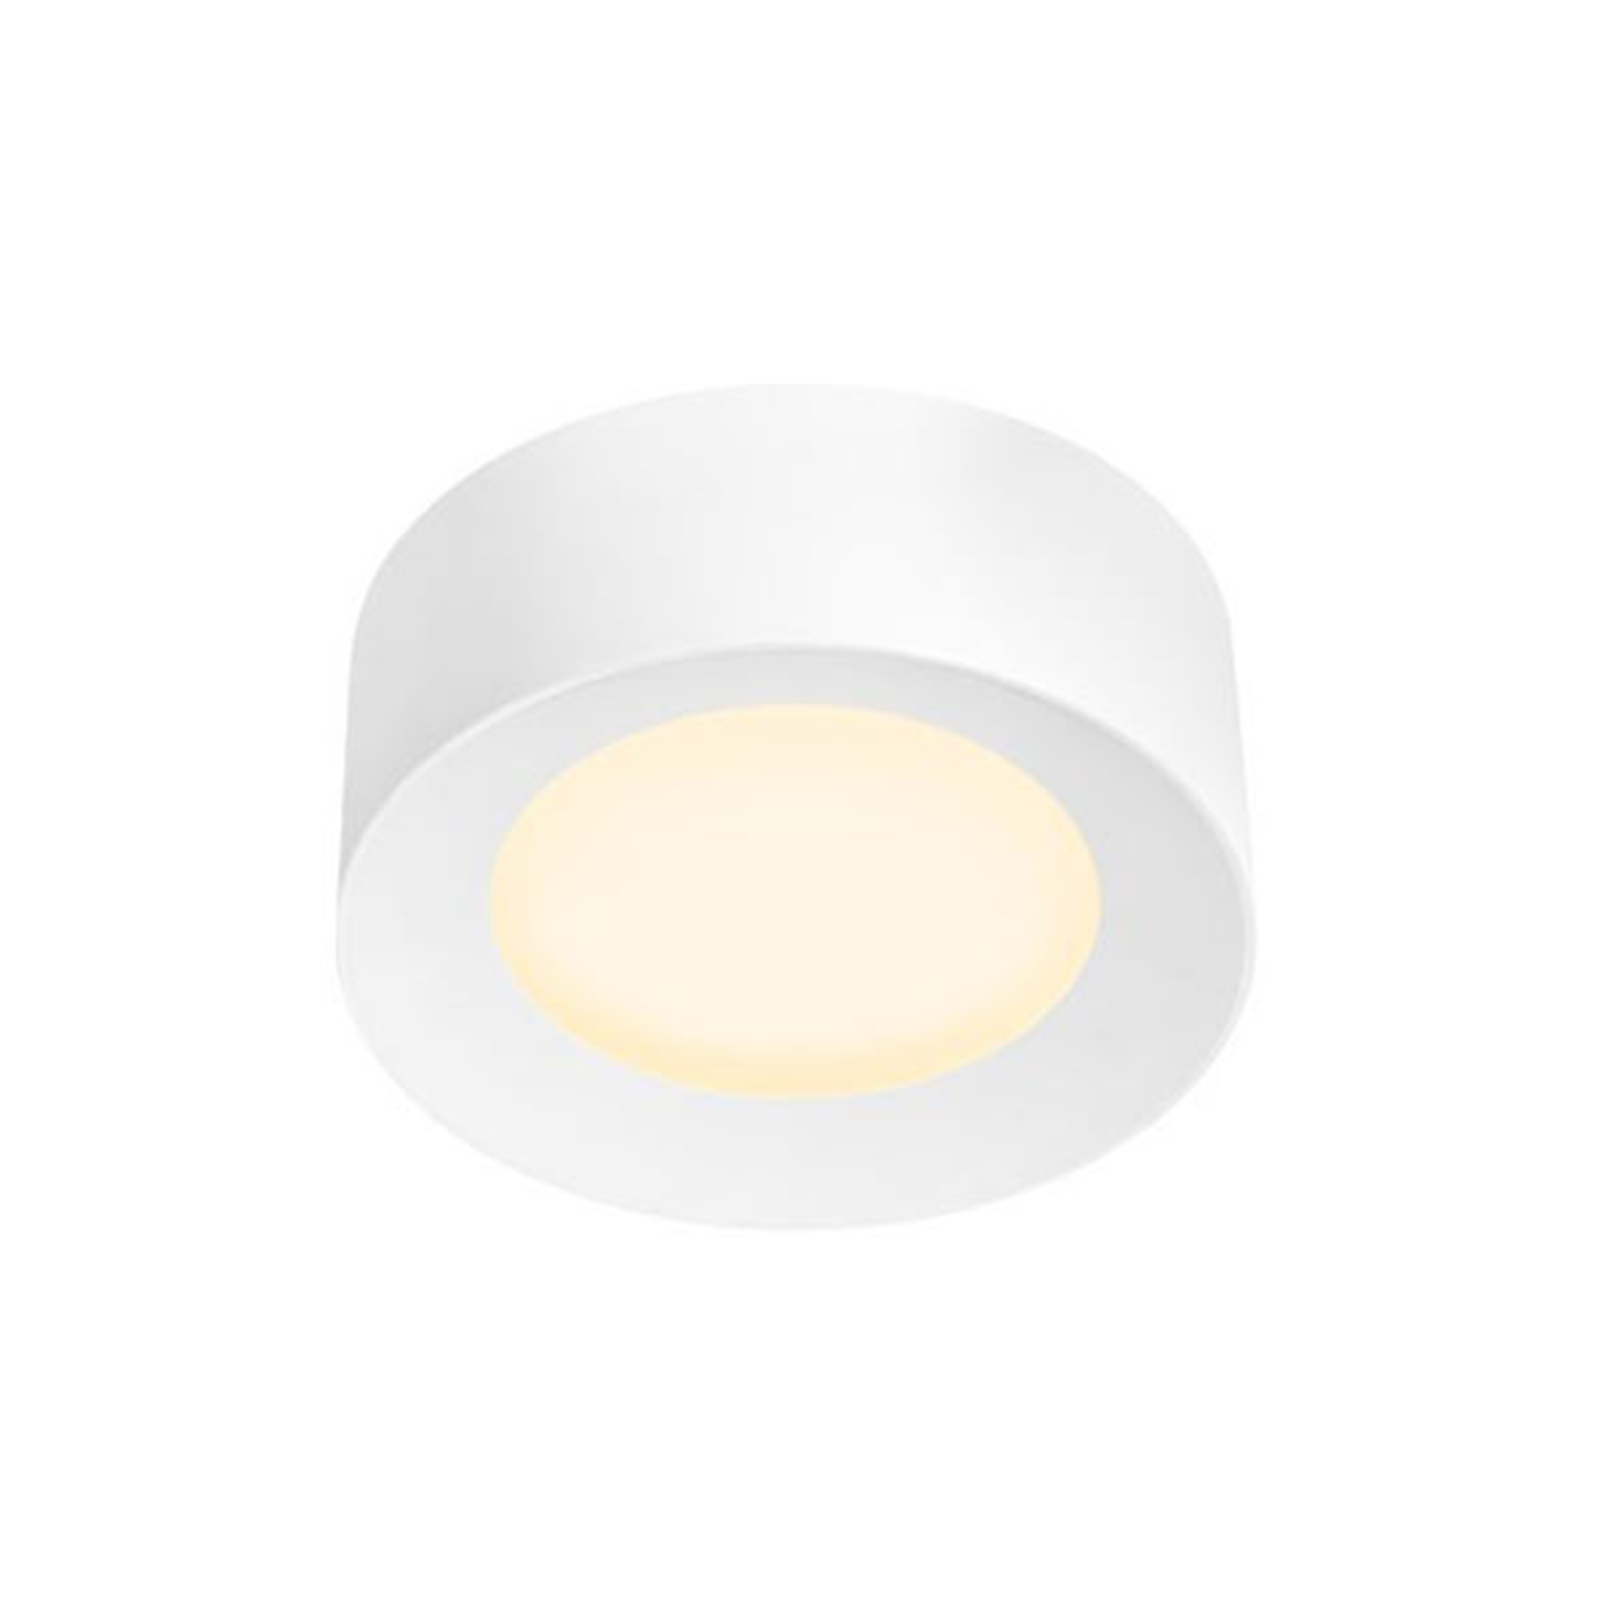 bros Vulgariteit toenemen SLV Fera LED plafondlamp, Ø 20 cm, DALI-dimbaar | Lampen24.nl